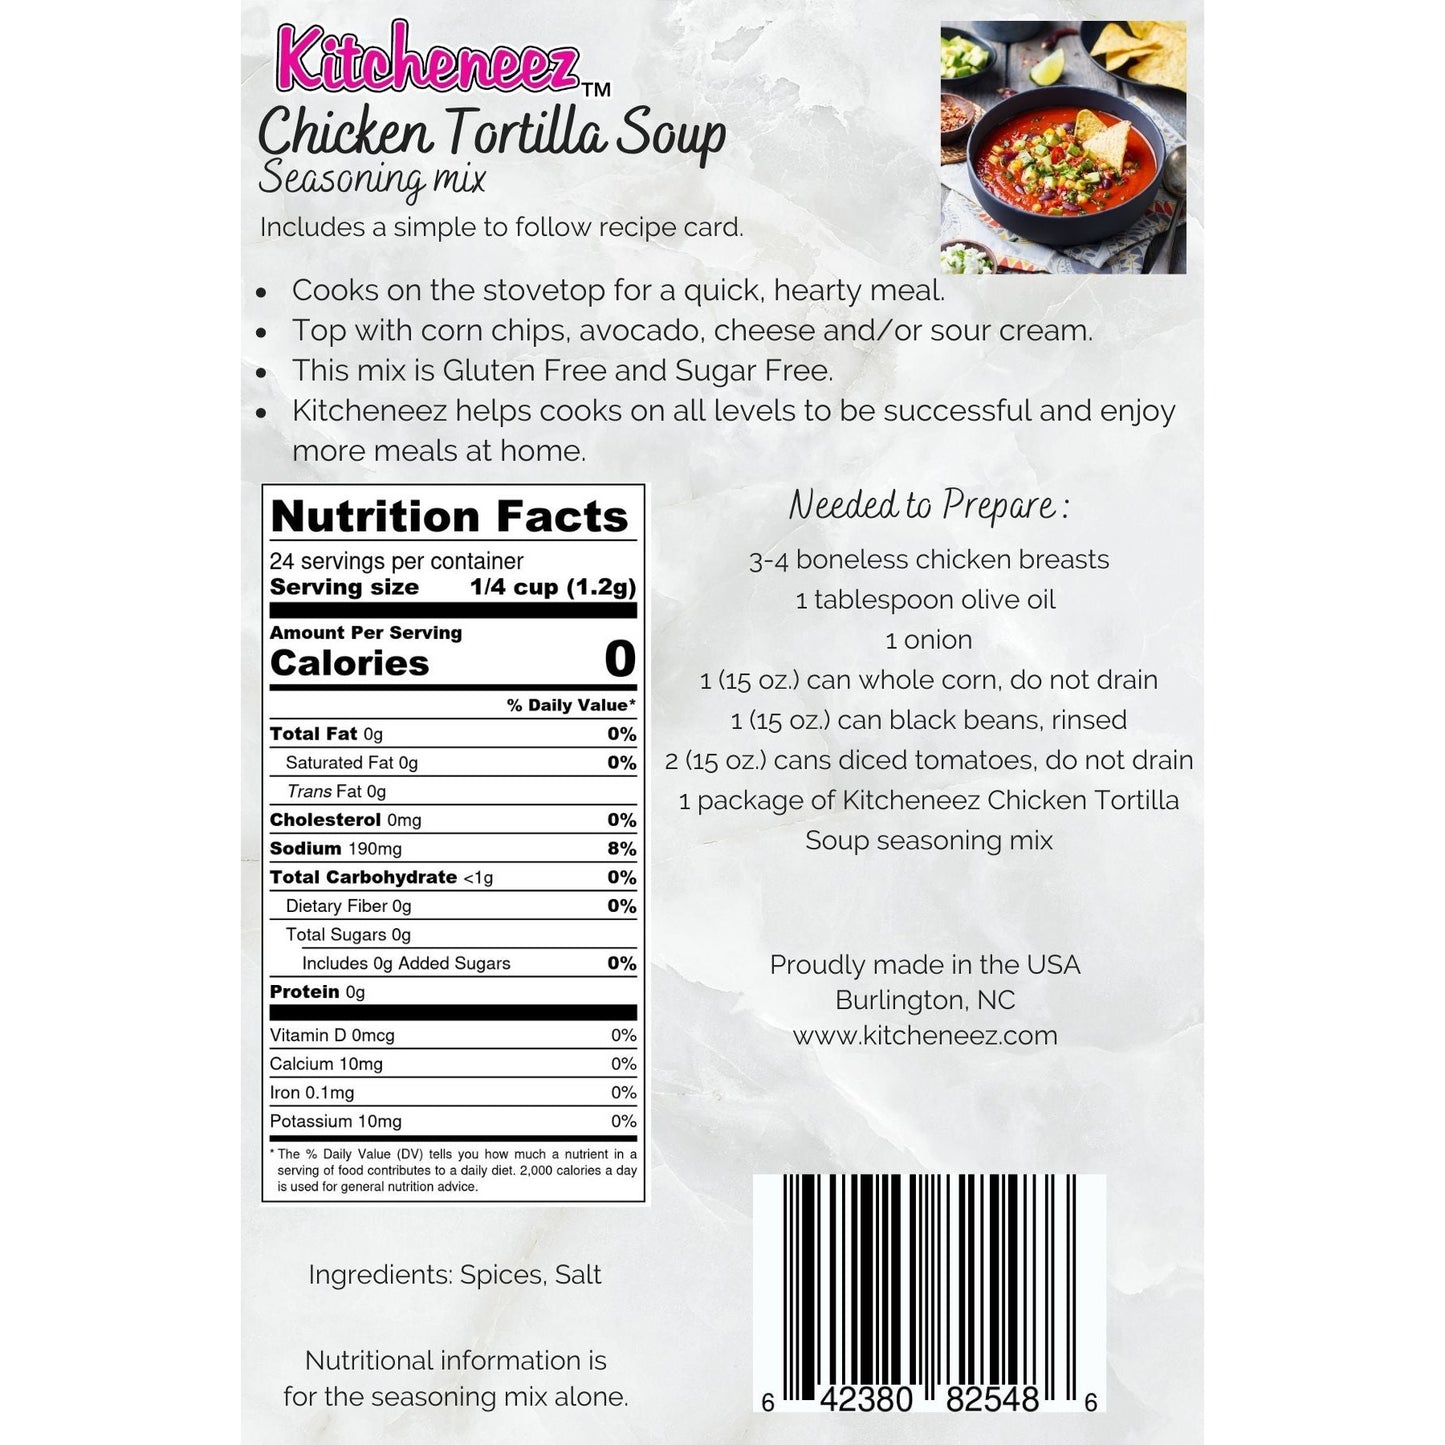 Chicken Tortilla Soup seasoning mix